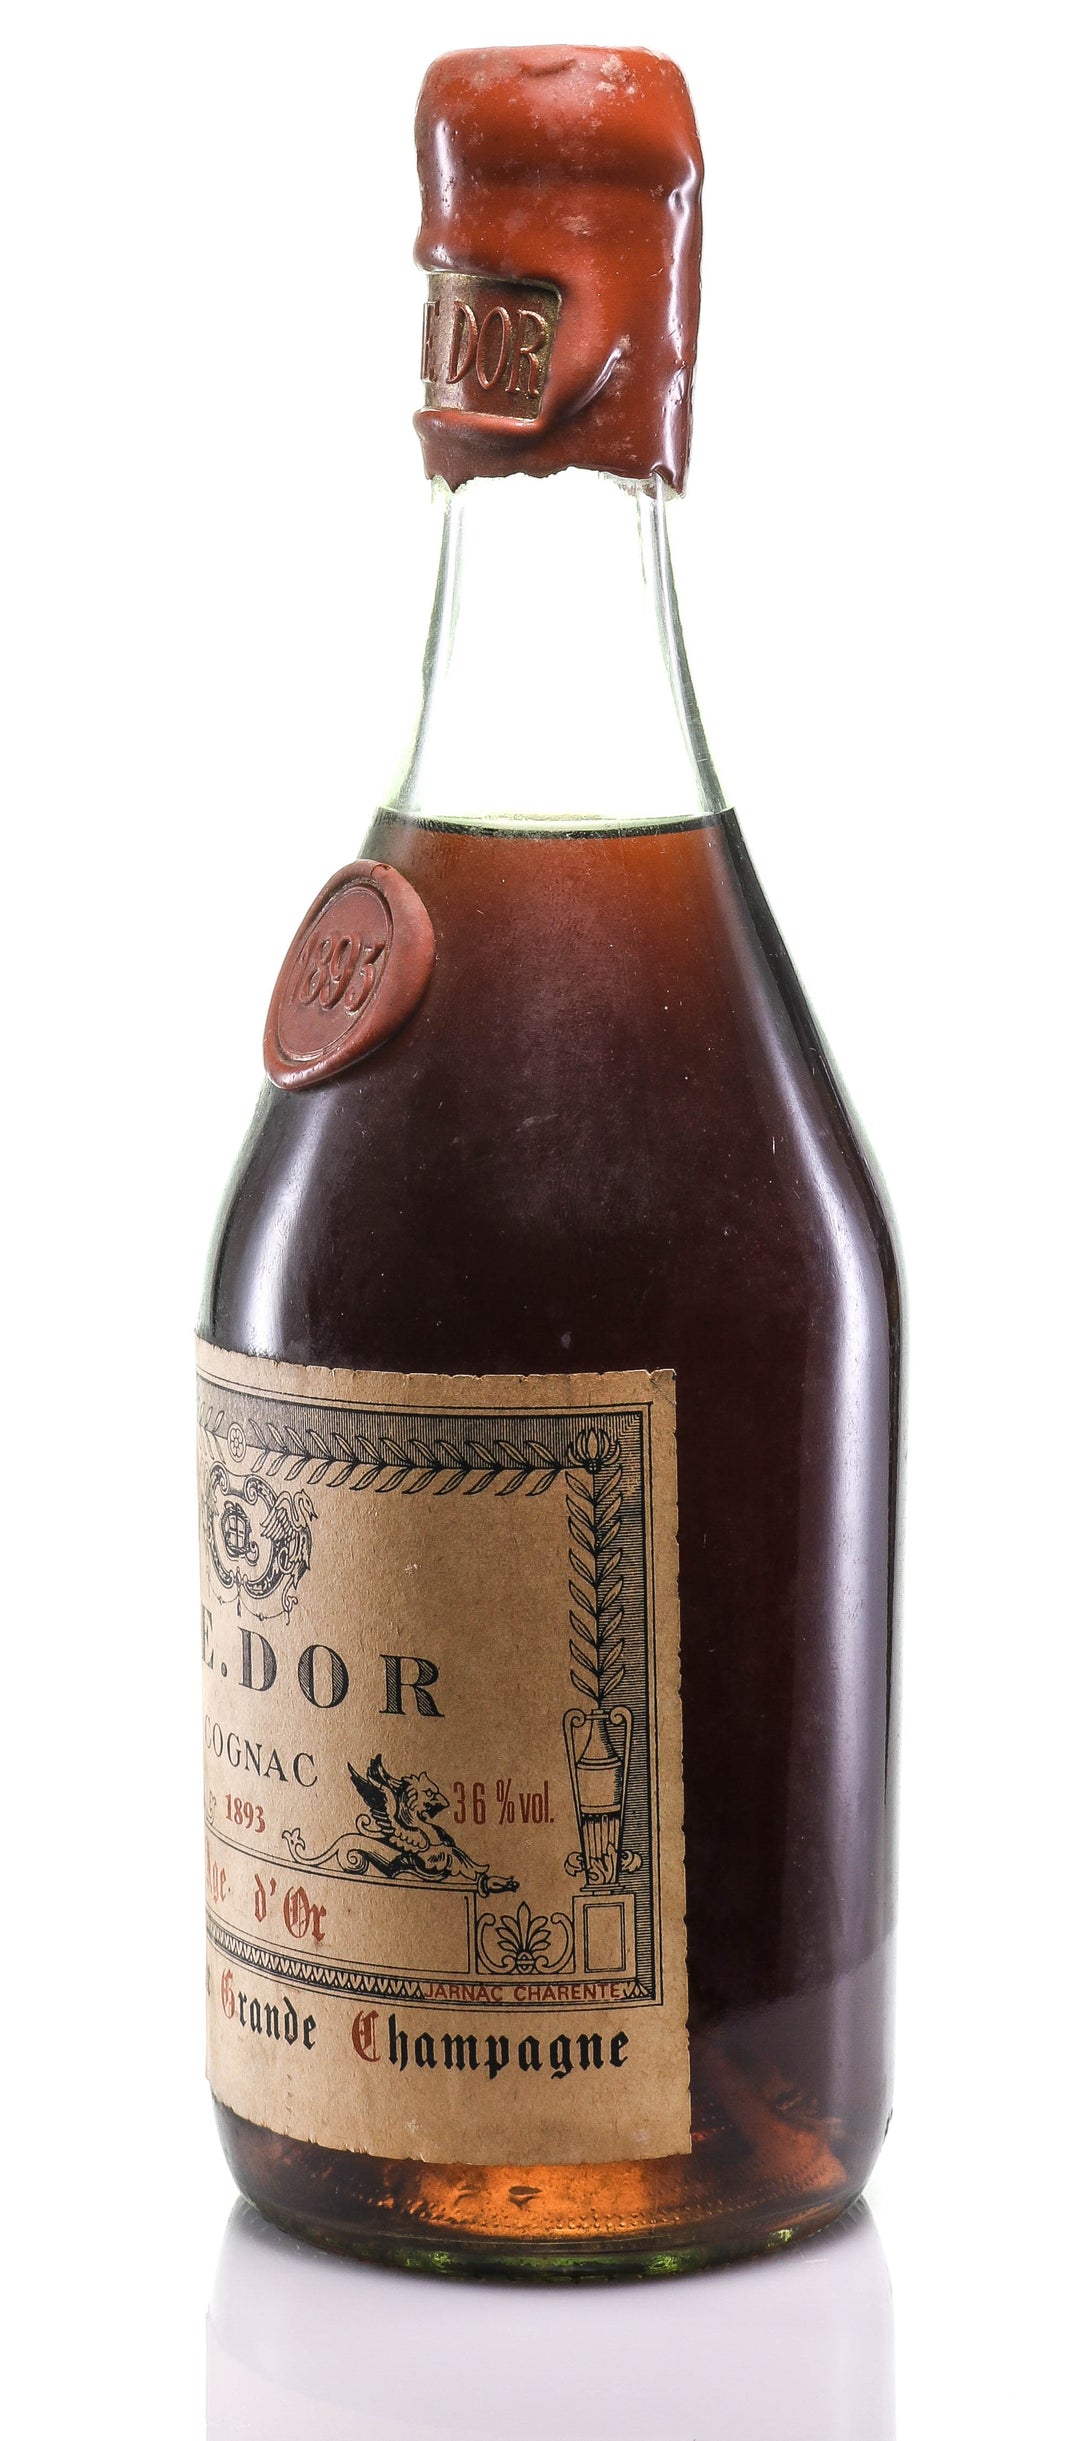 AE Dor No.1 Cognac 1893 Vintage Age d'Or - legendaryvintages